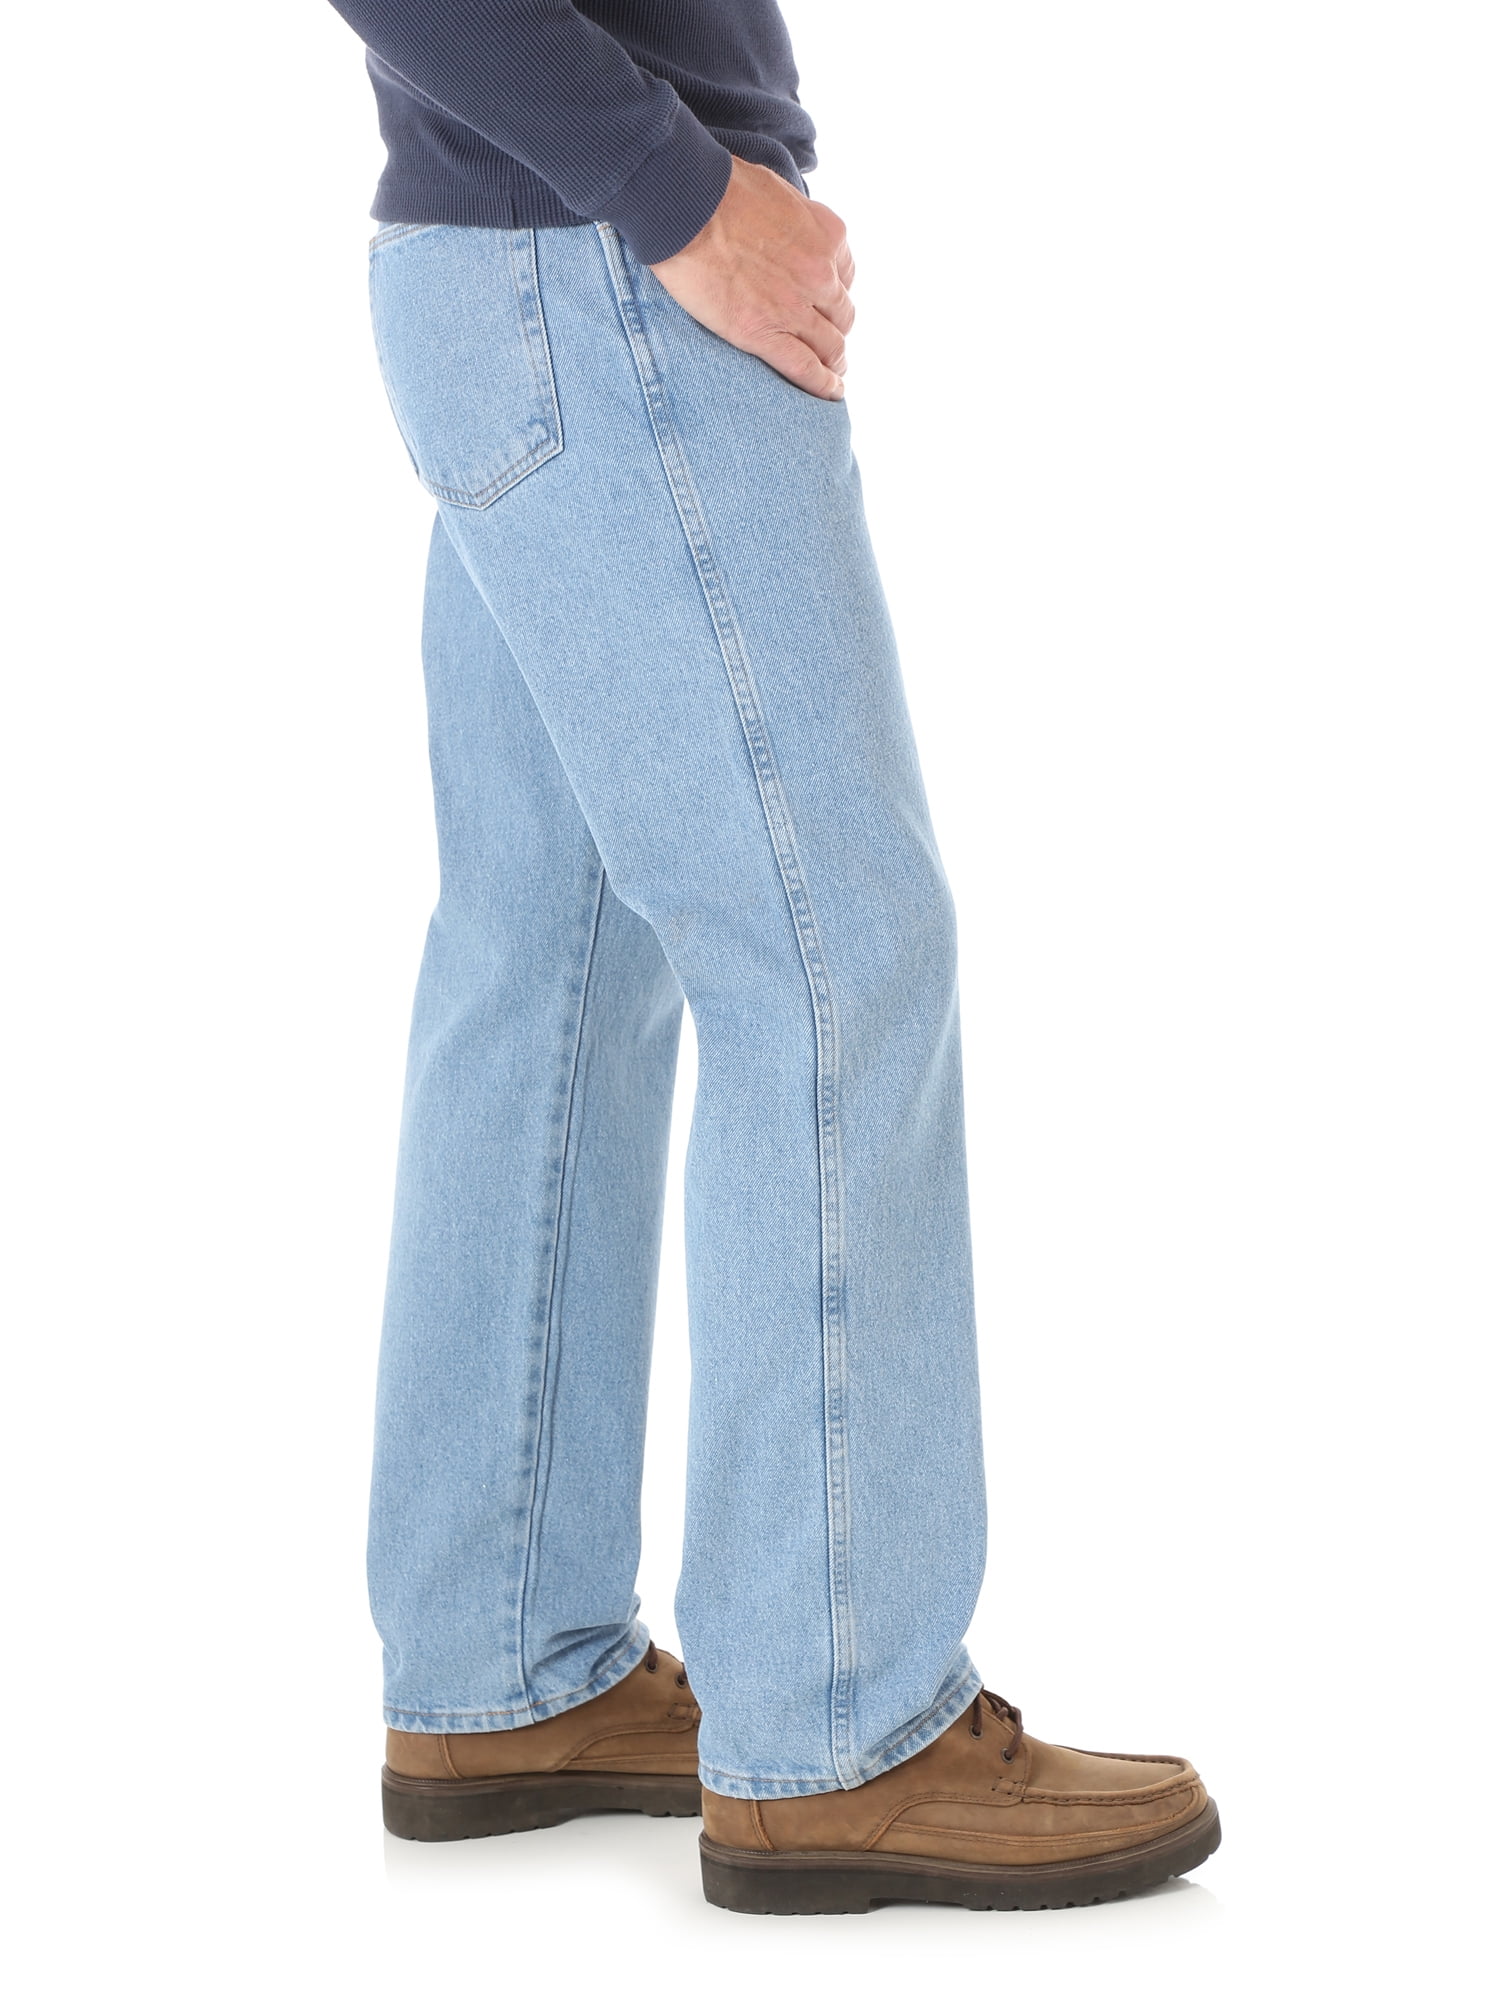 Wrangler Rustler Men's and Big Men's Relaxed Fit Jeans 